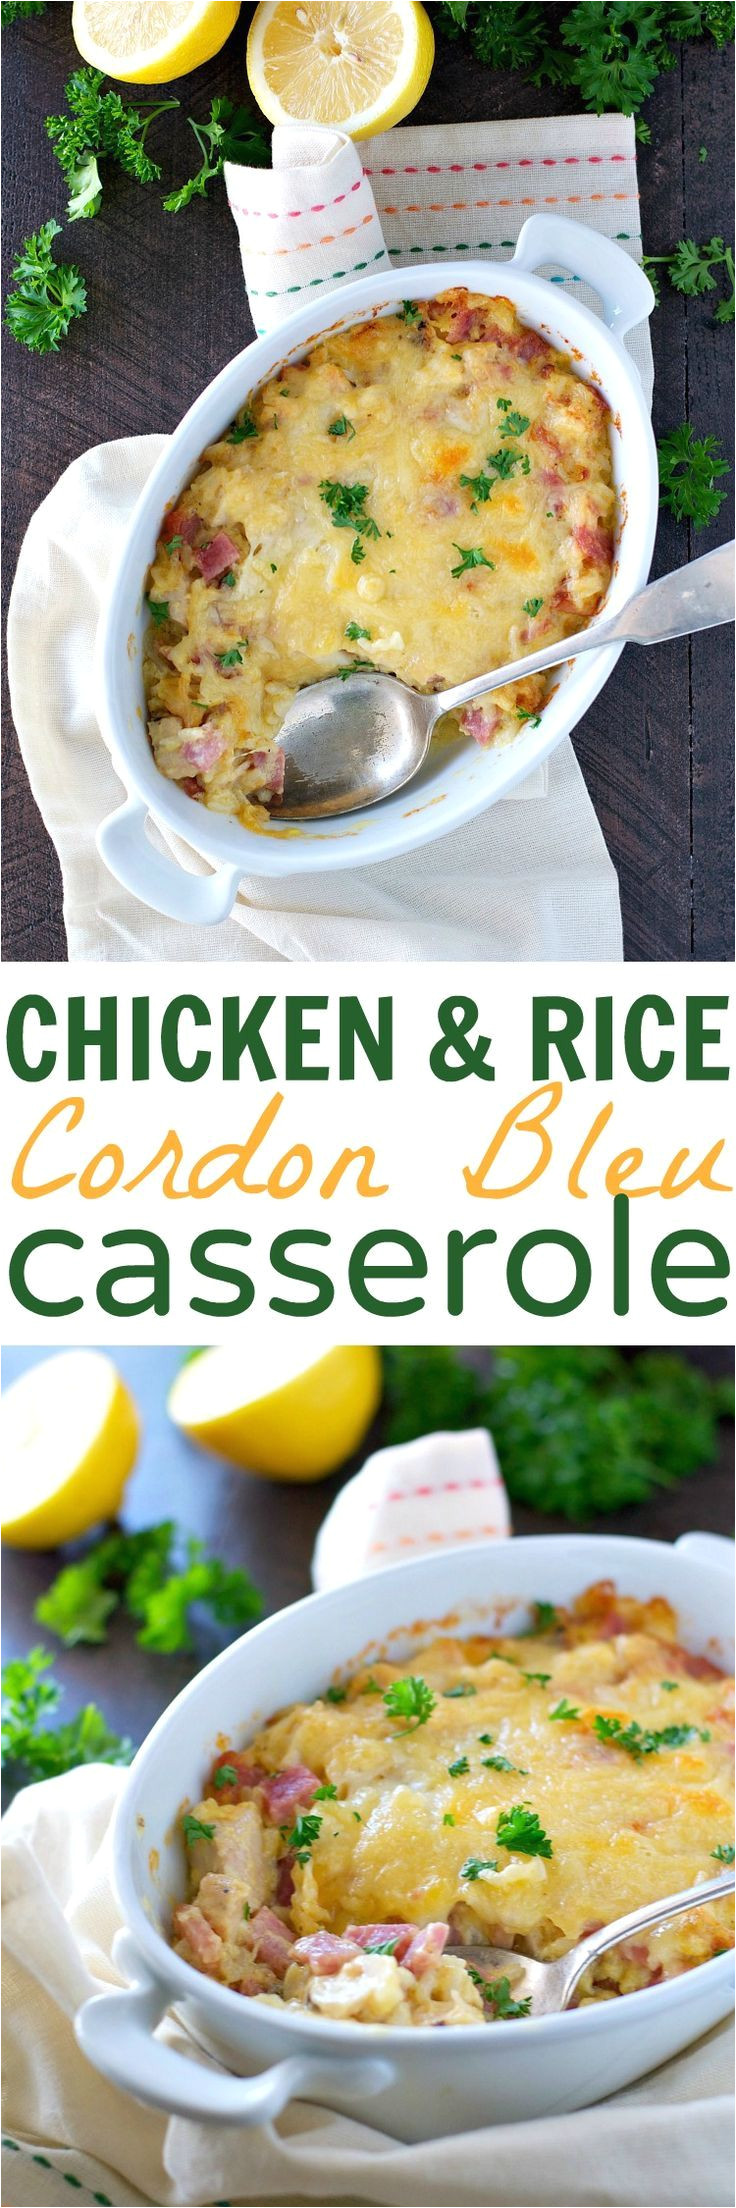 chicken and rice cordon bleu casserole